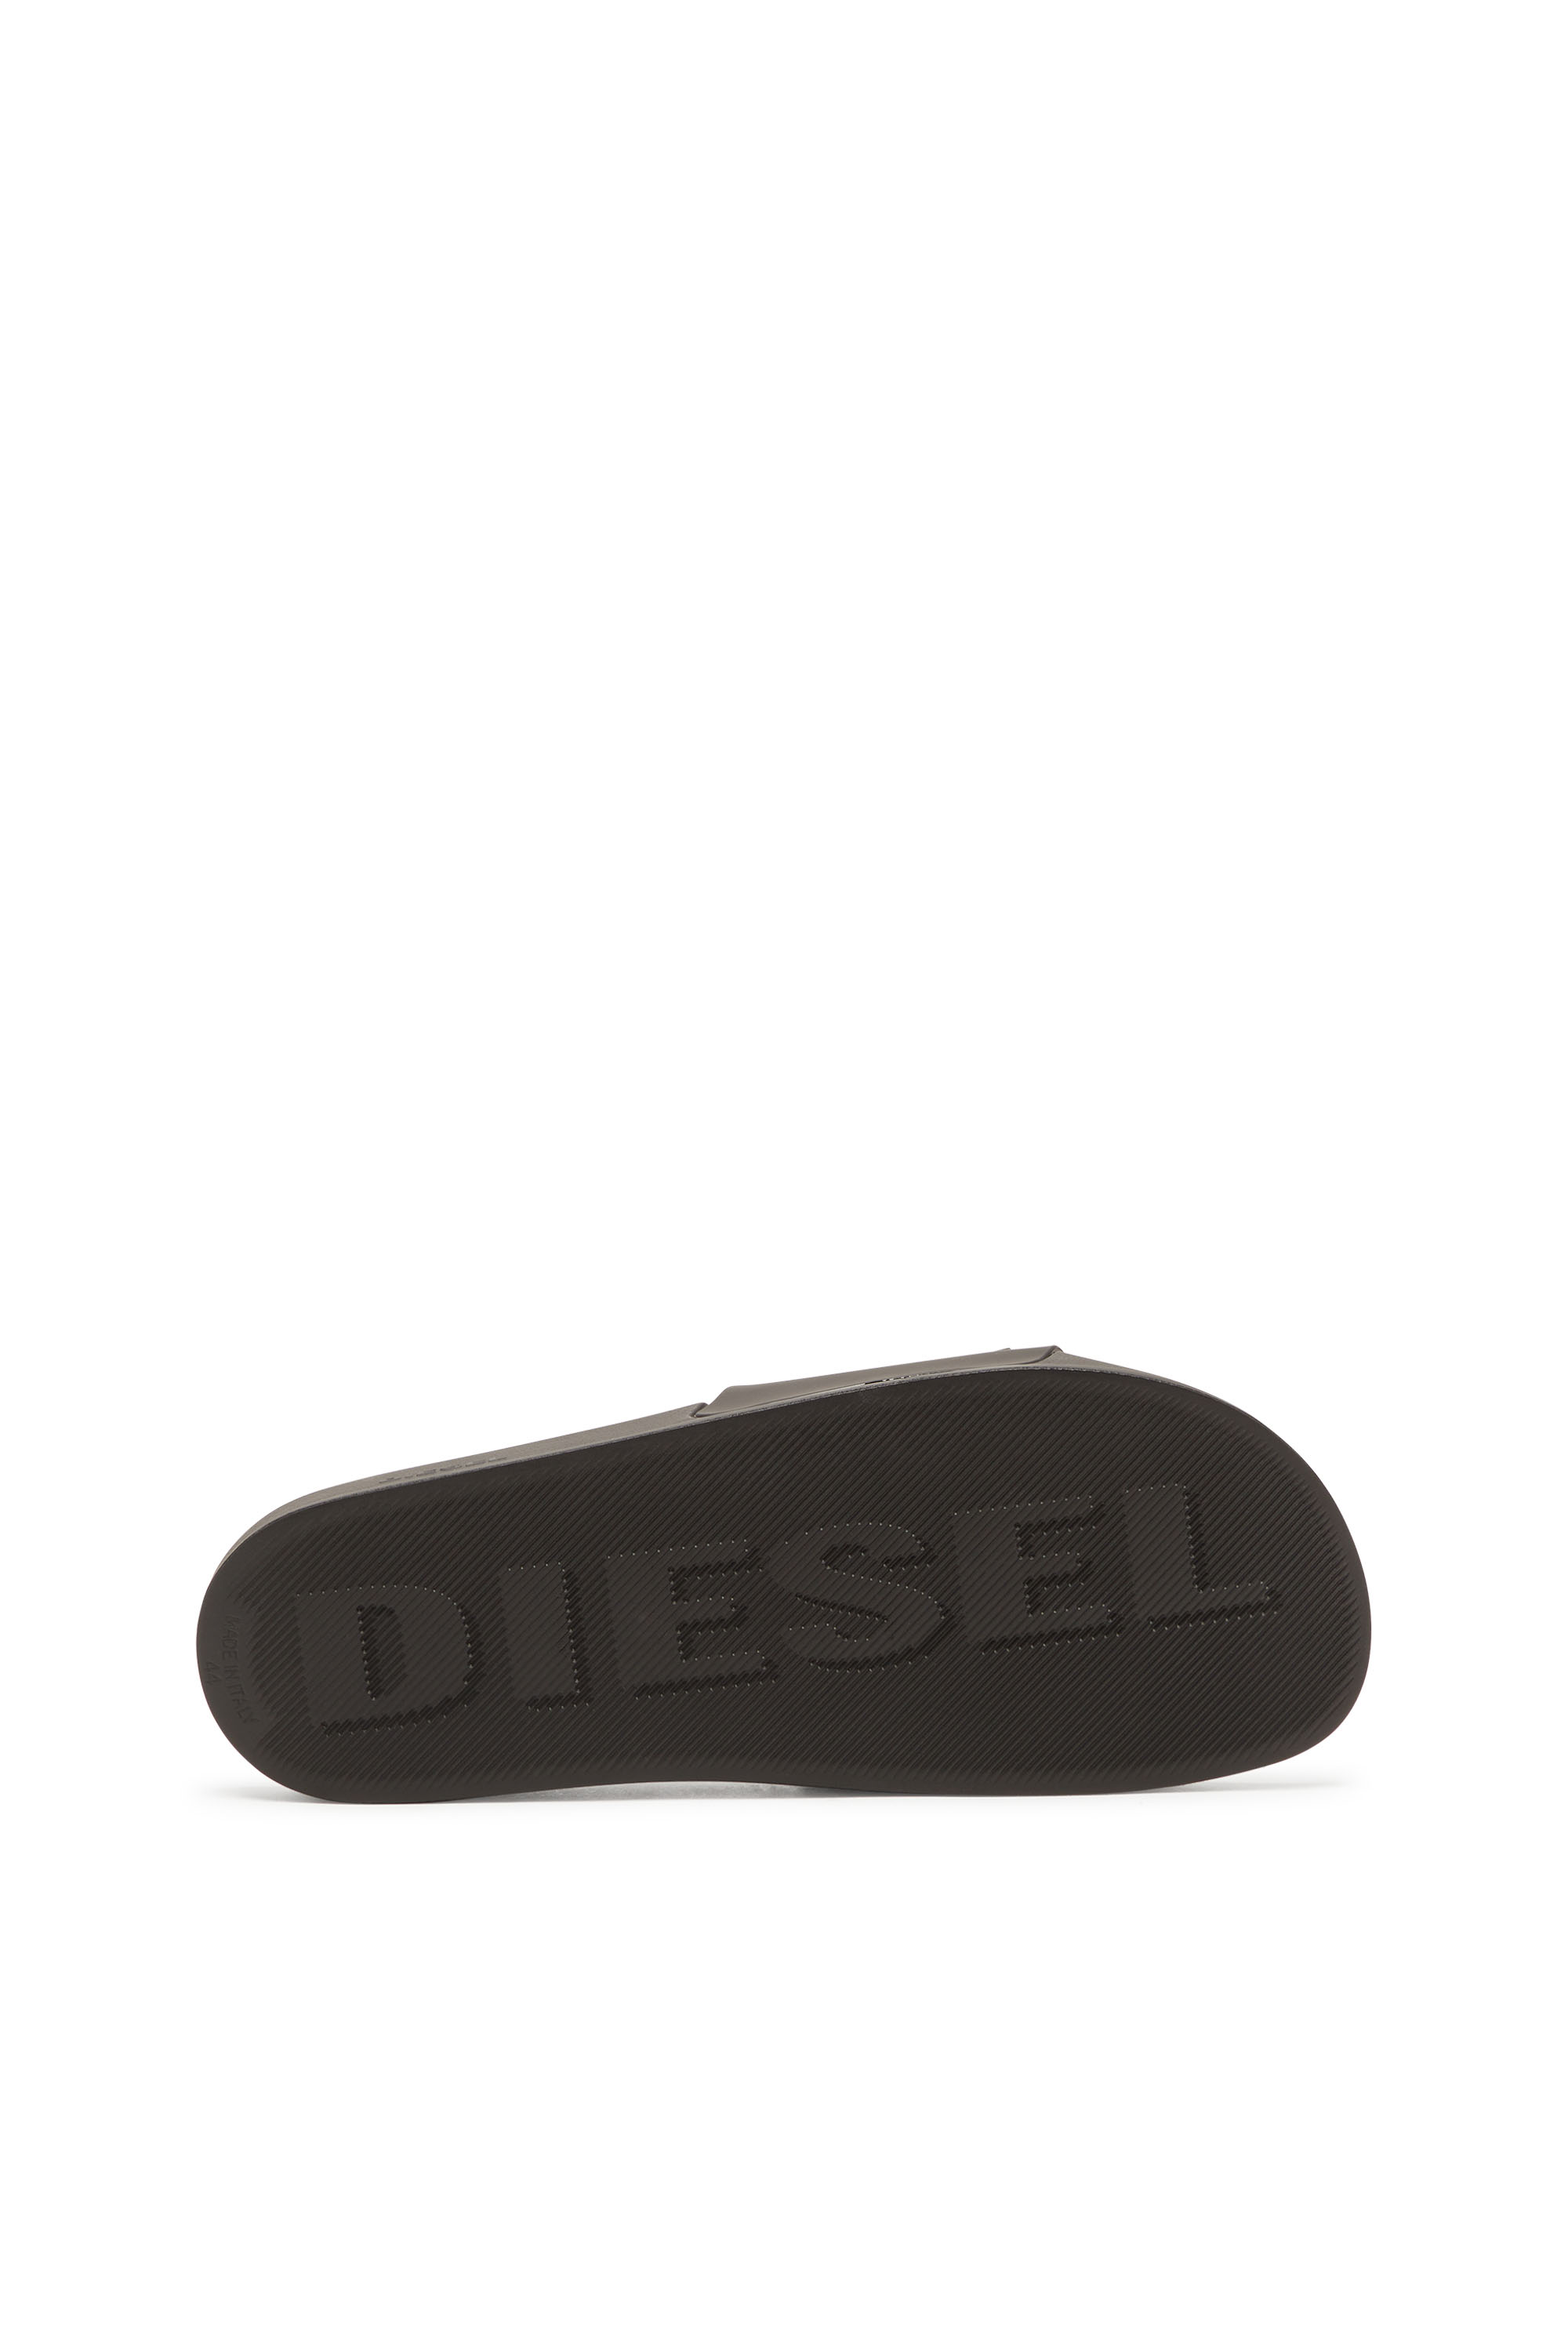 Diesel - SA-MAYEMI, Black - Image 4